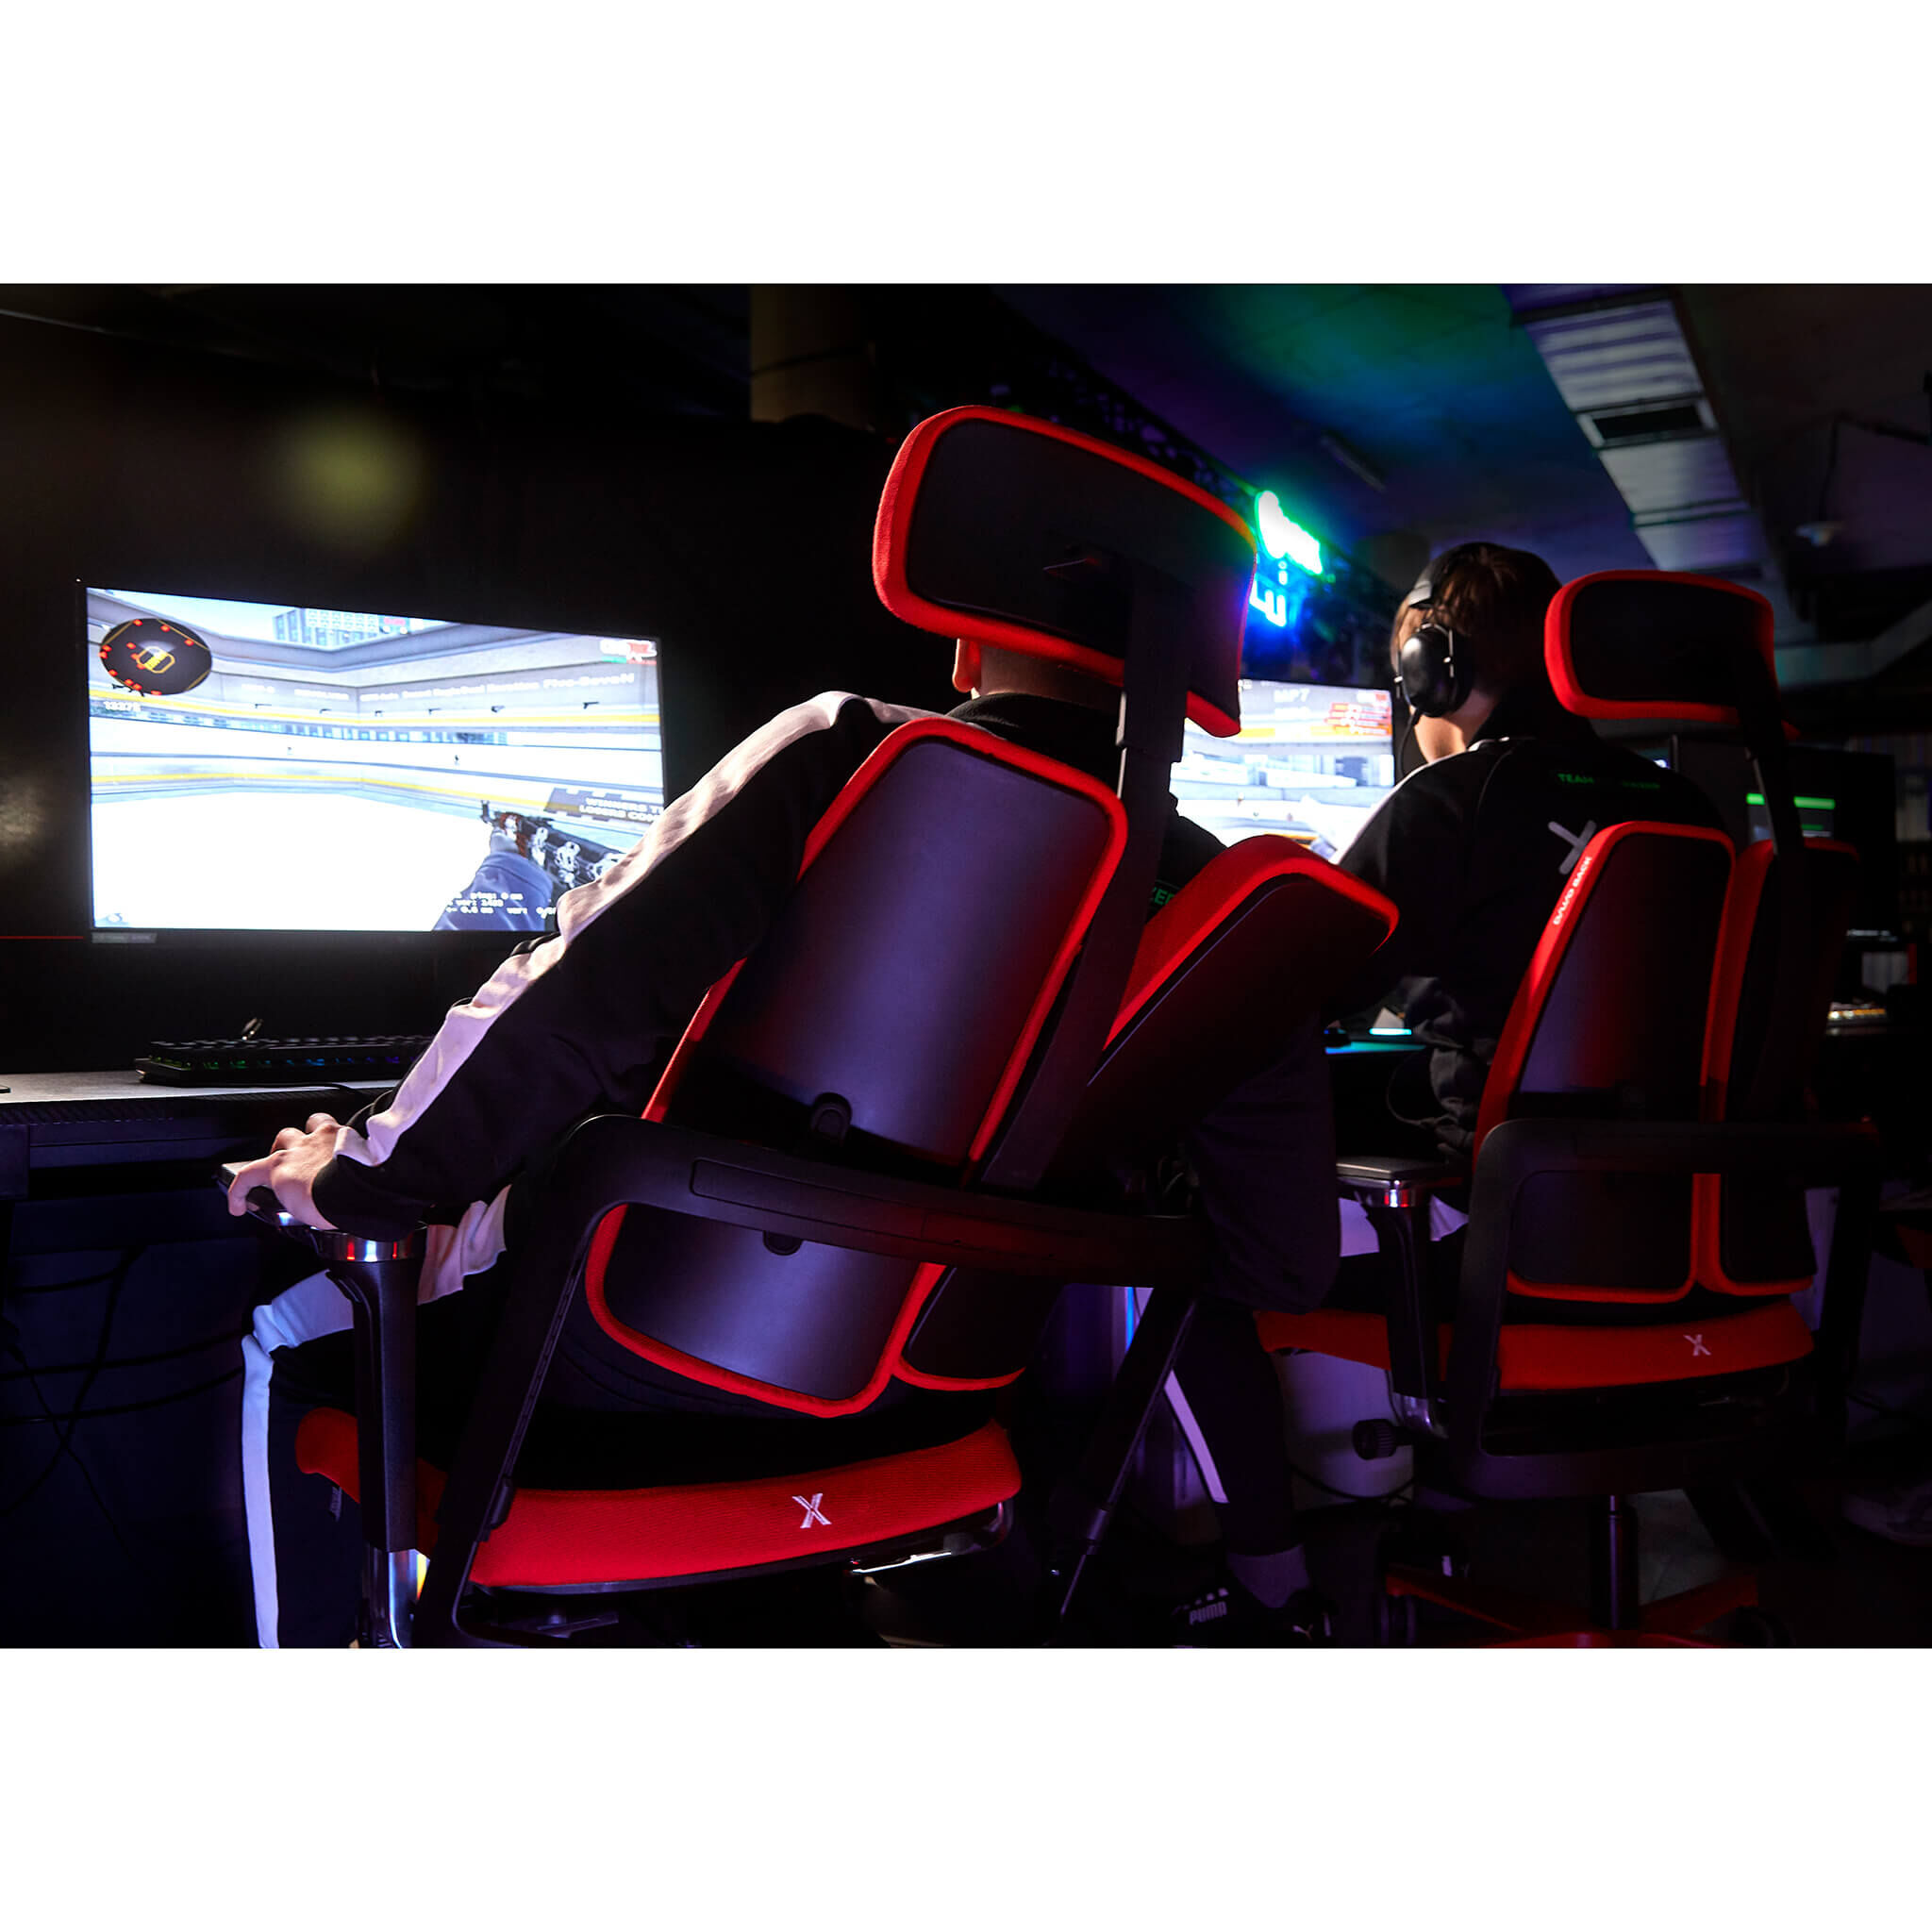 Nowy Styl XiliumG Gamingstuhl in rot mit zweigeteilter Rückenlehne Duo Back